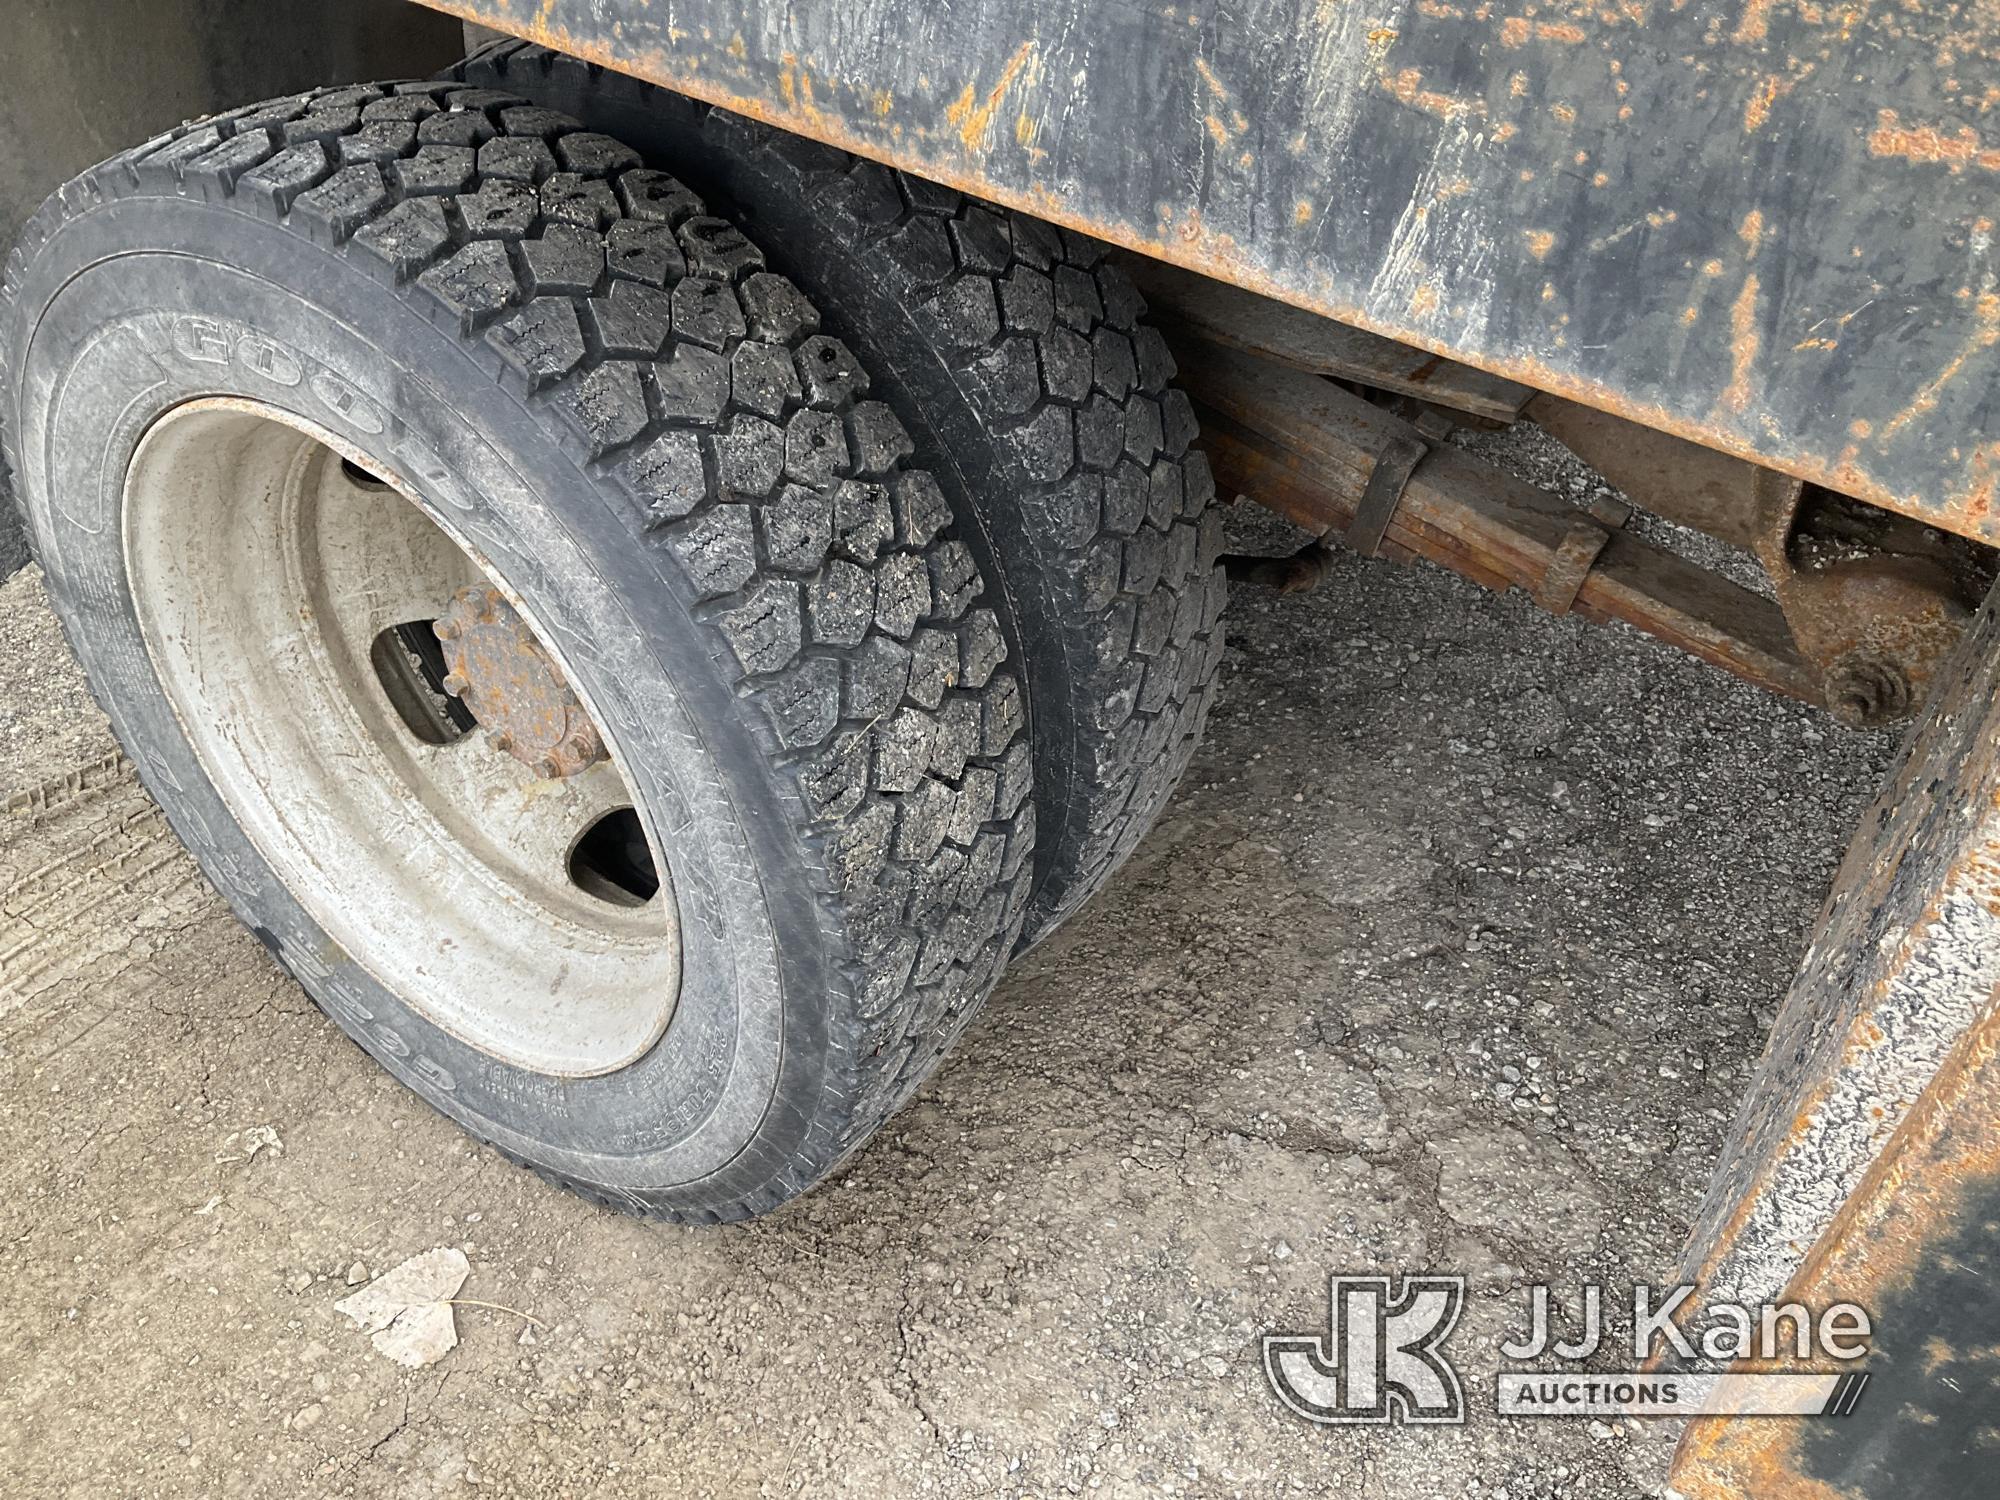 (Kansas City, MO) 2014 RAM 5500 4x4 Crew-Cab Flatbed/Service Truck Runs, Do Not Drive Or Move) (Has